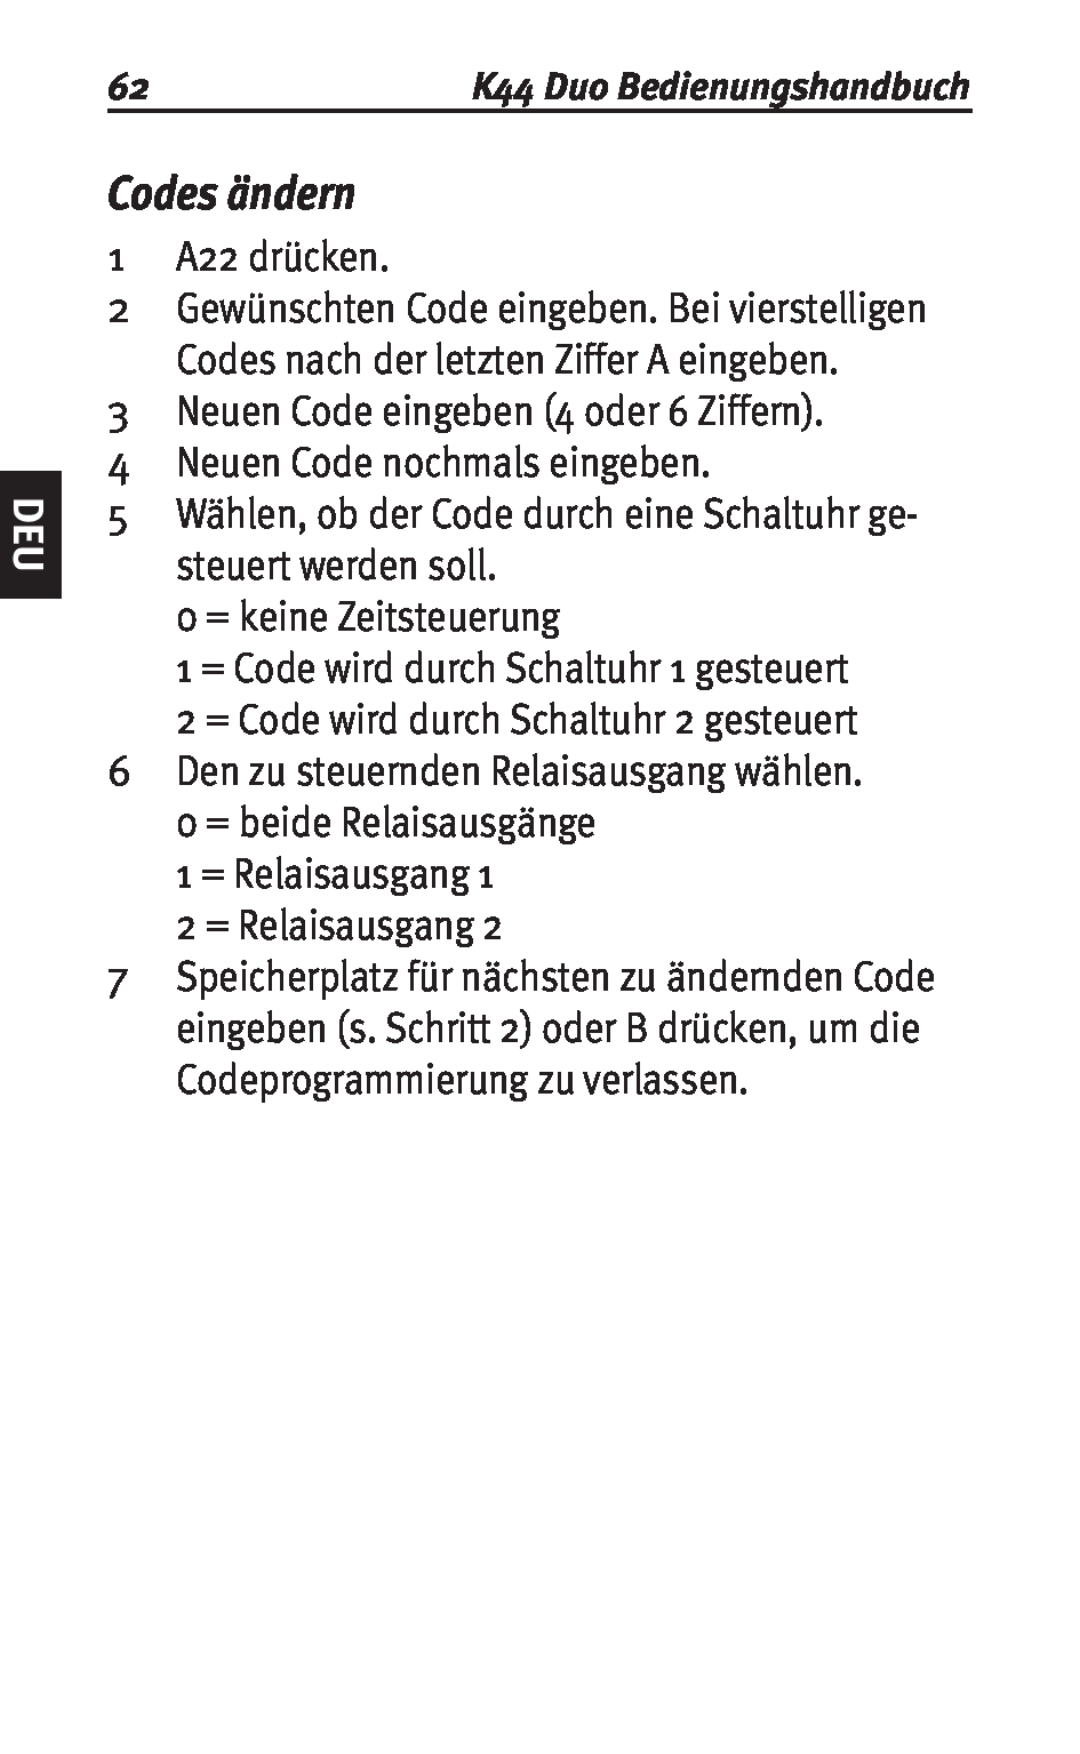 Siemens K44 user manual Codes ändern 